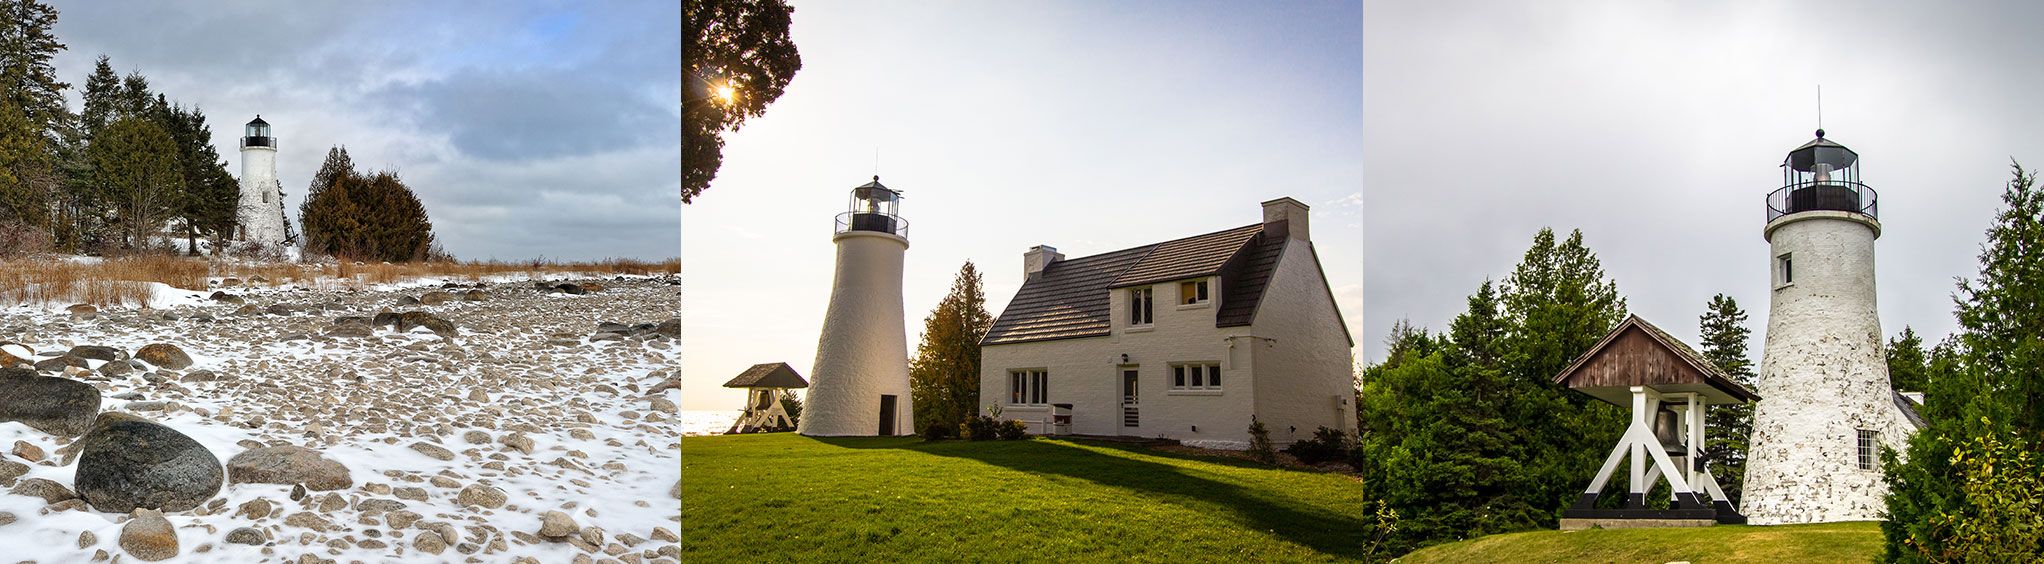 Old Presque Isle Lighthouse near Mackinac Island, MI